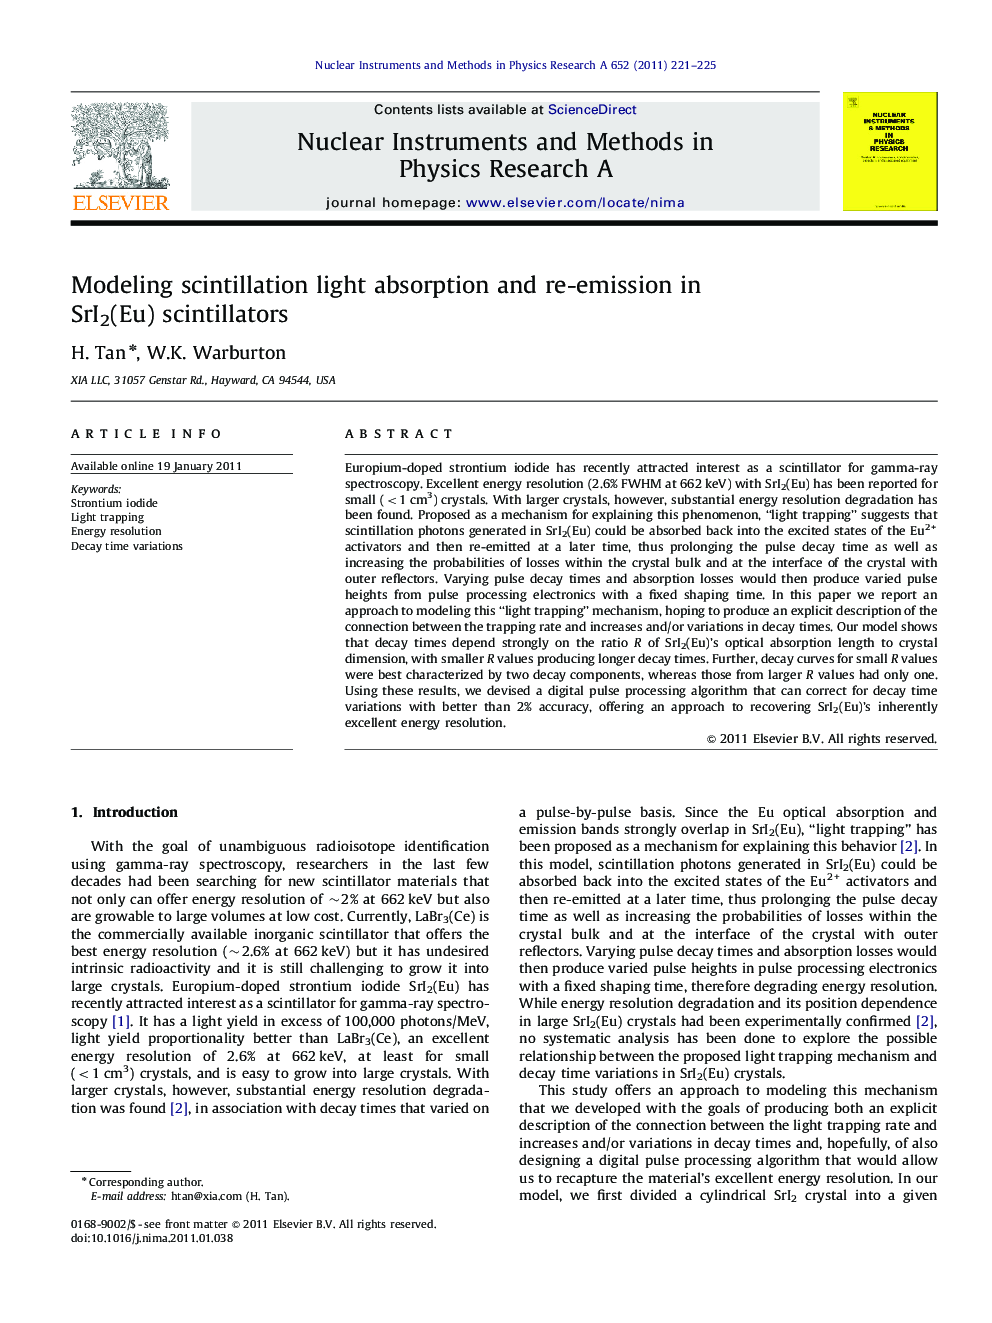 Modeling scintillation light absorption and re-emission in SrI2(Eu) scintillators